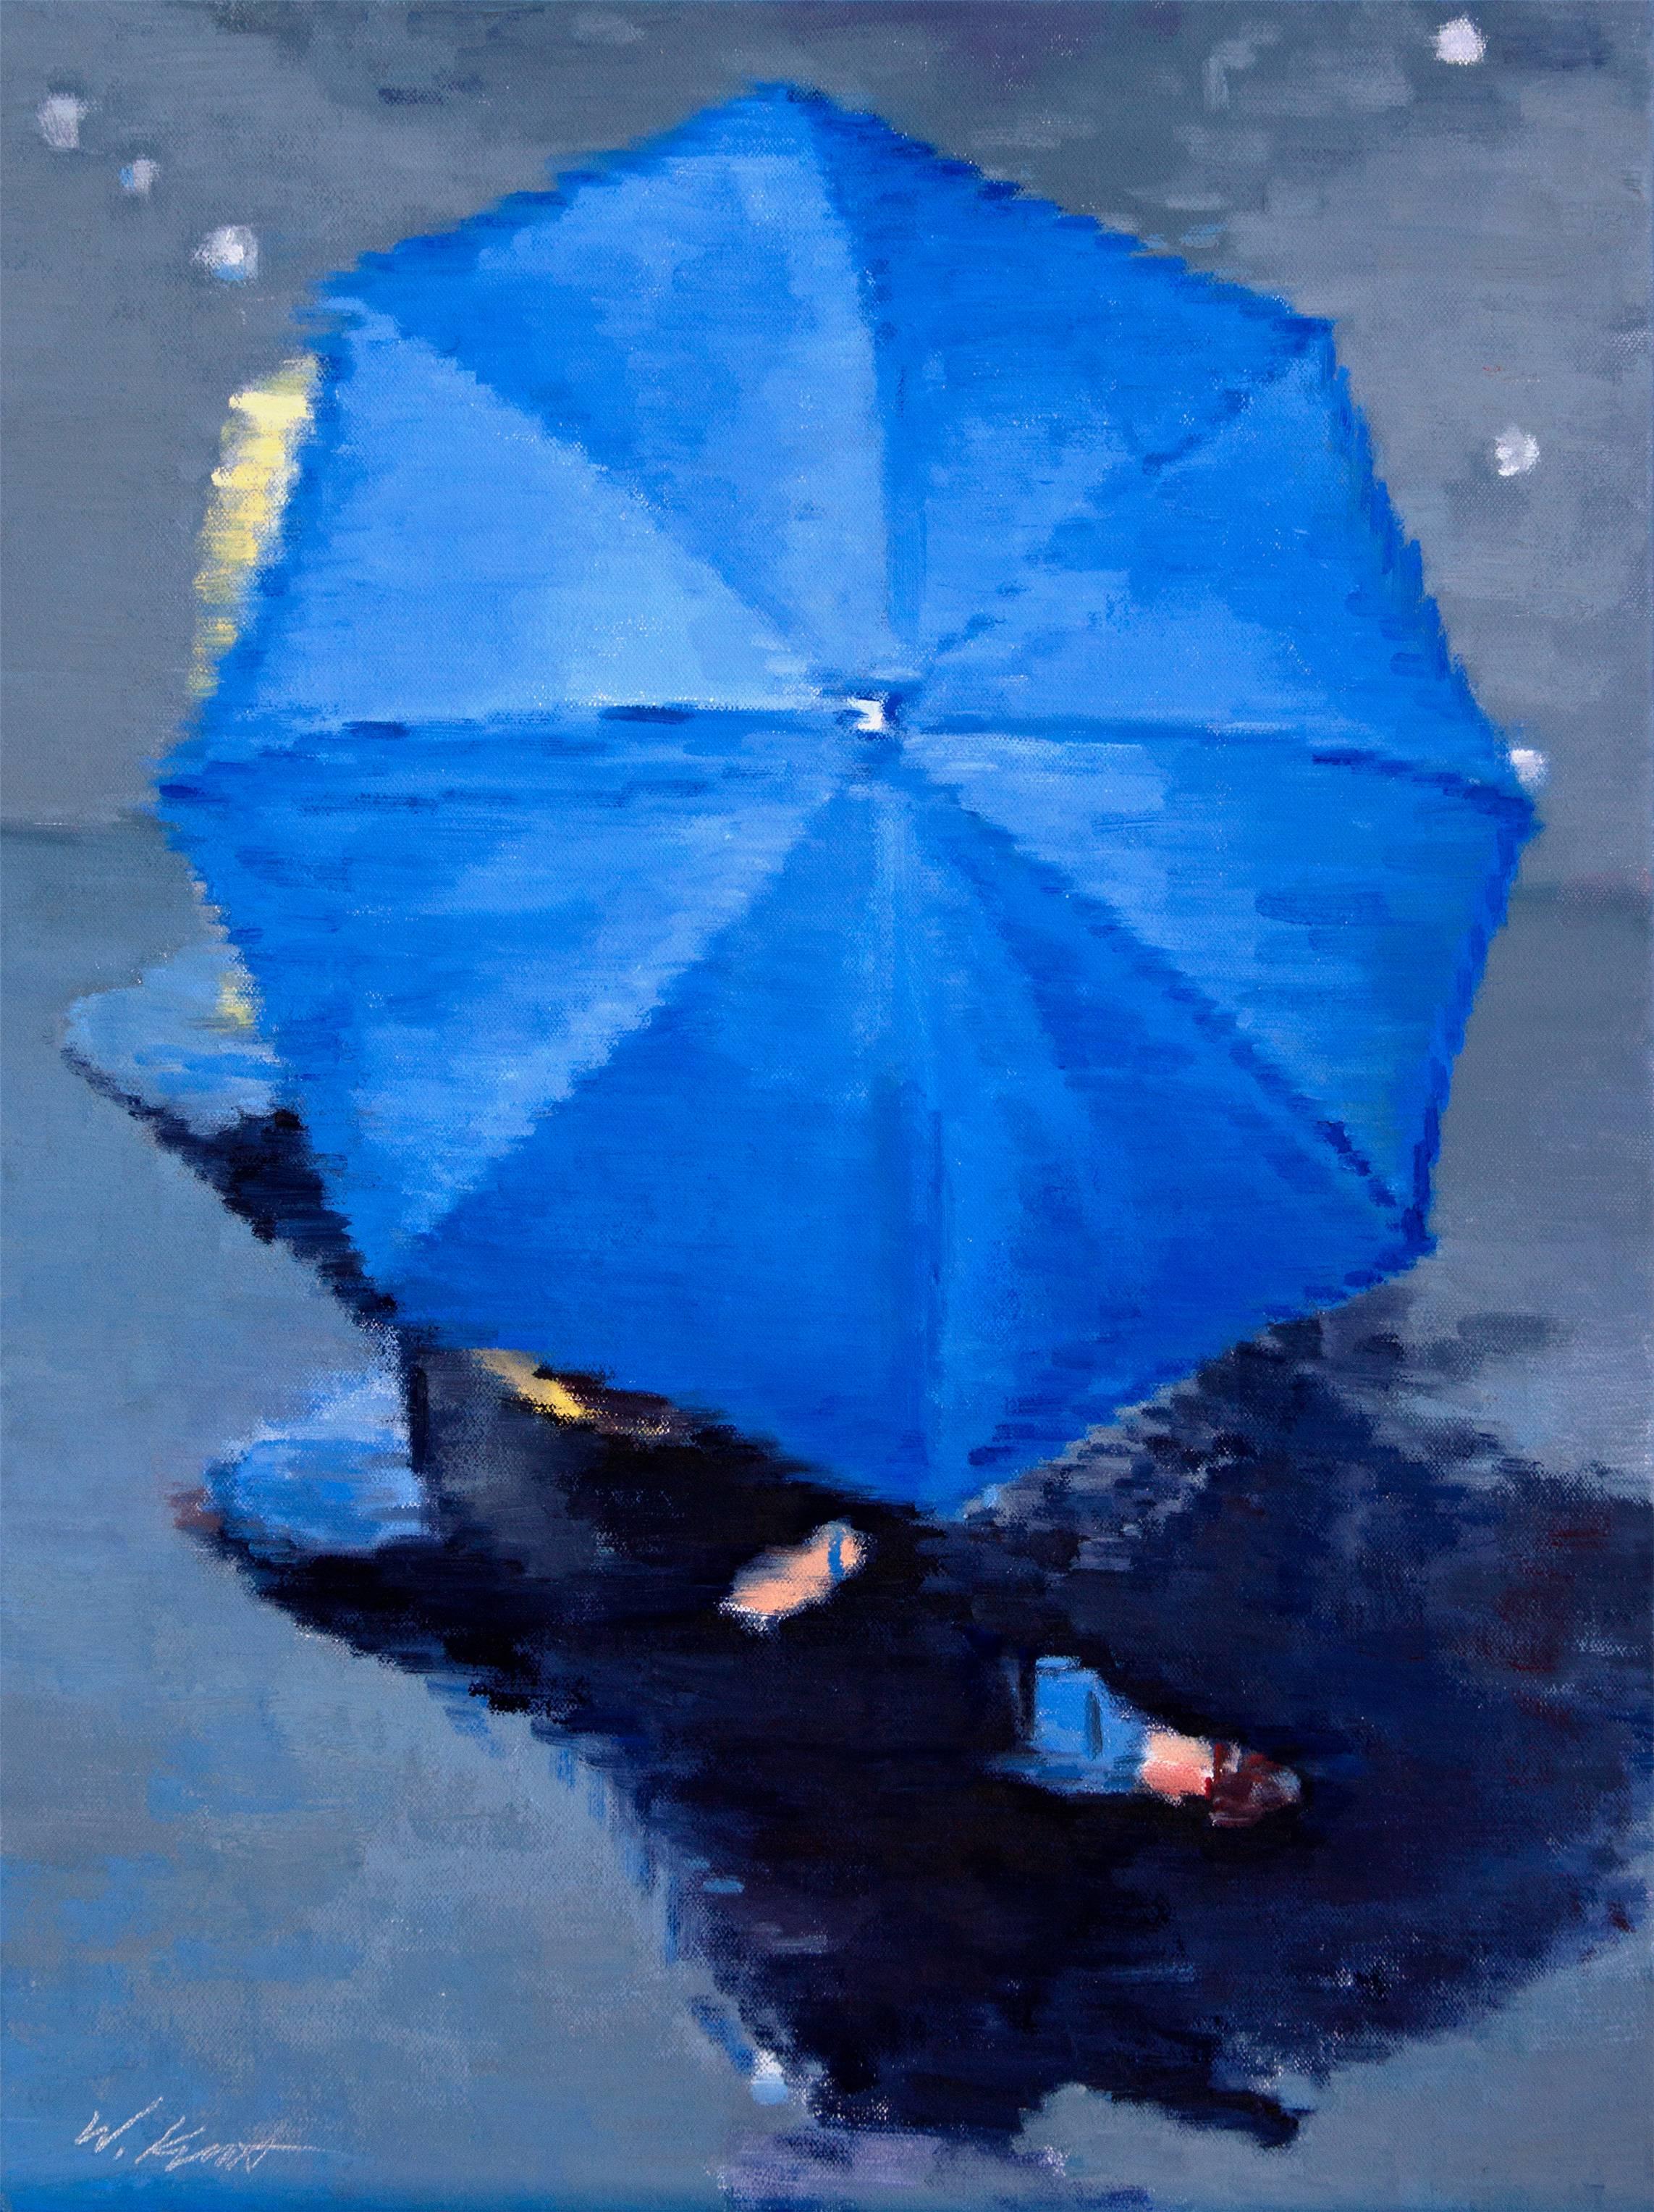 Warren Keating Portrait Painting - Parisian Couple under Blue Umbrella in Paris Rain